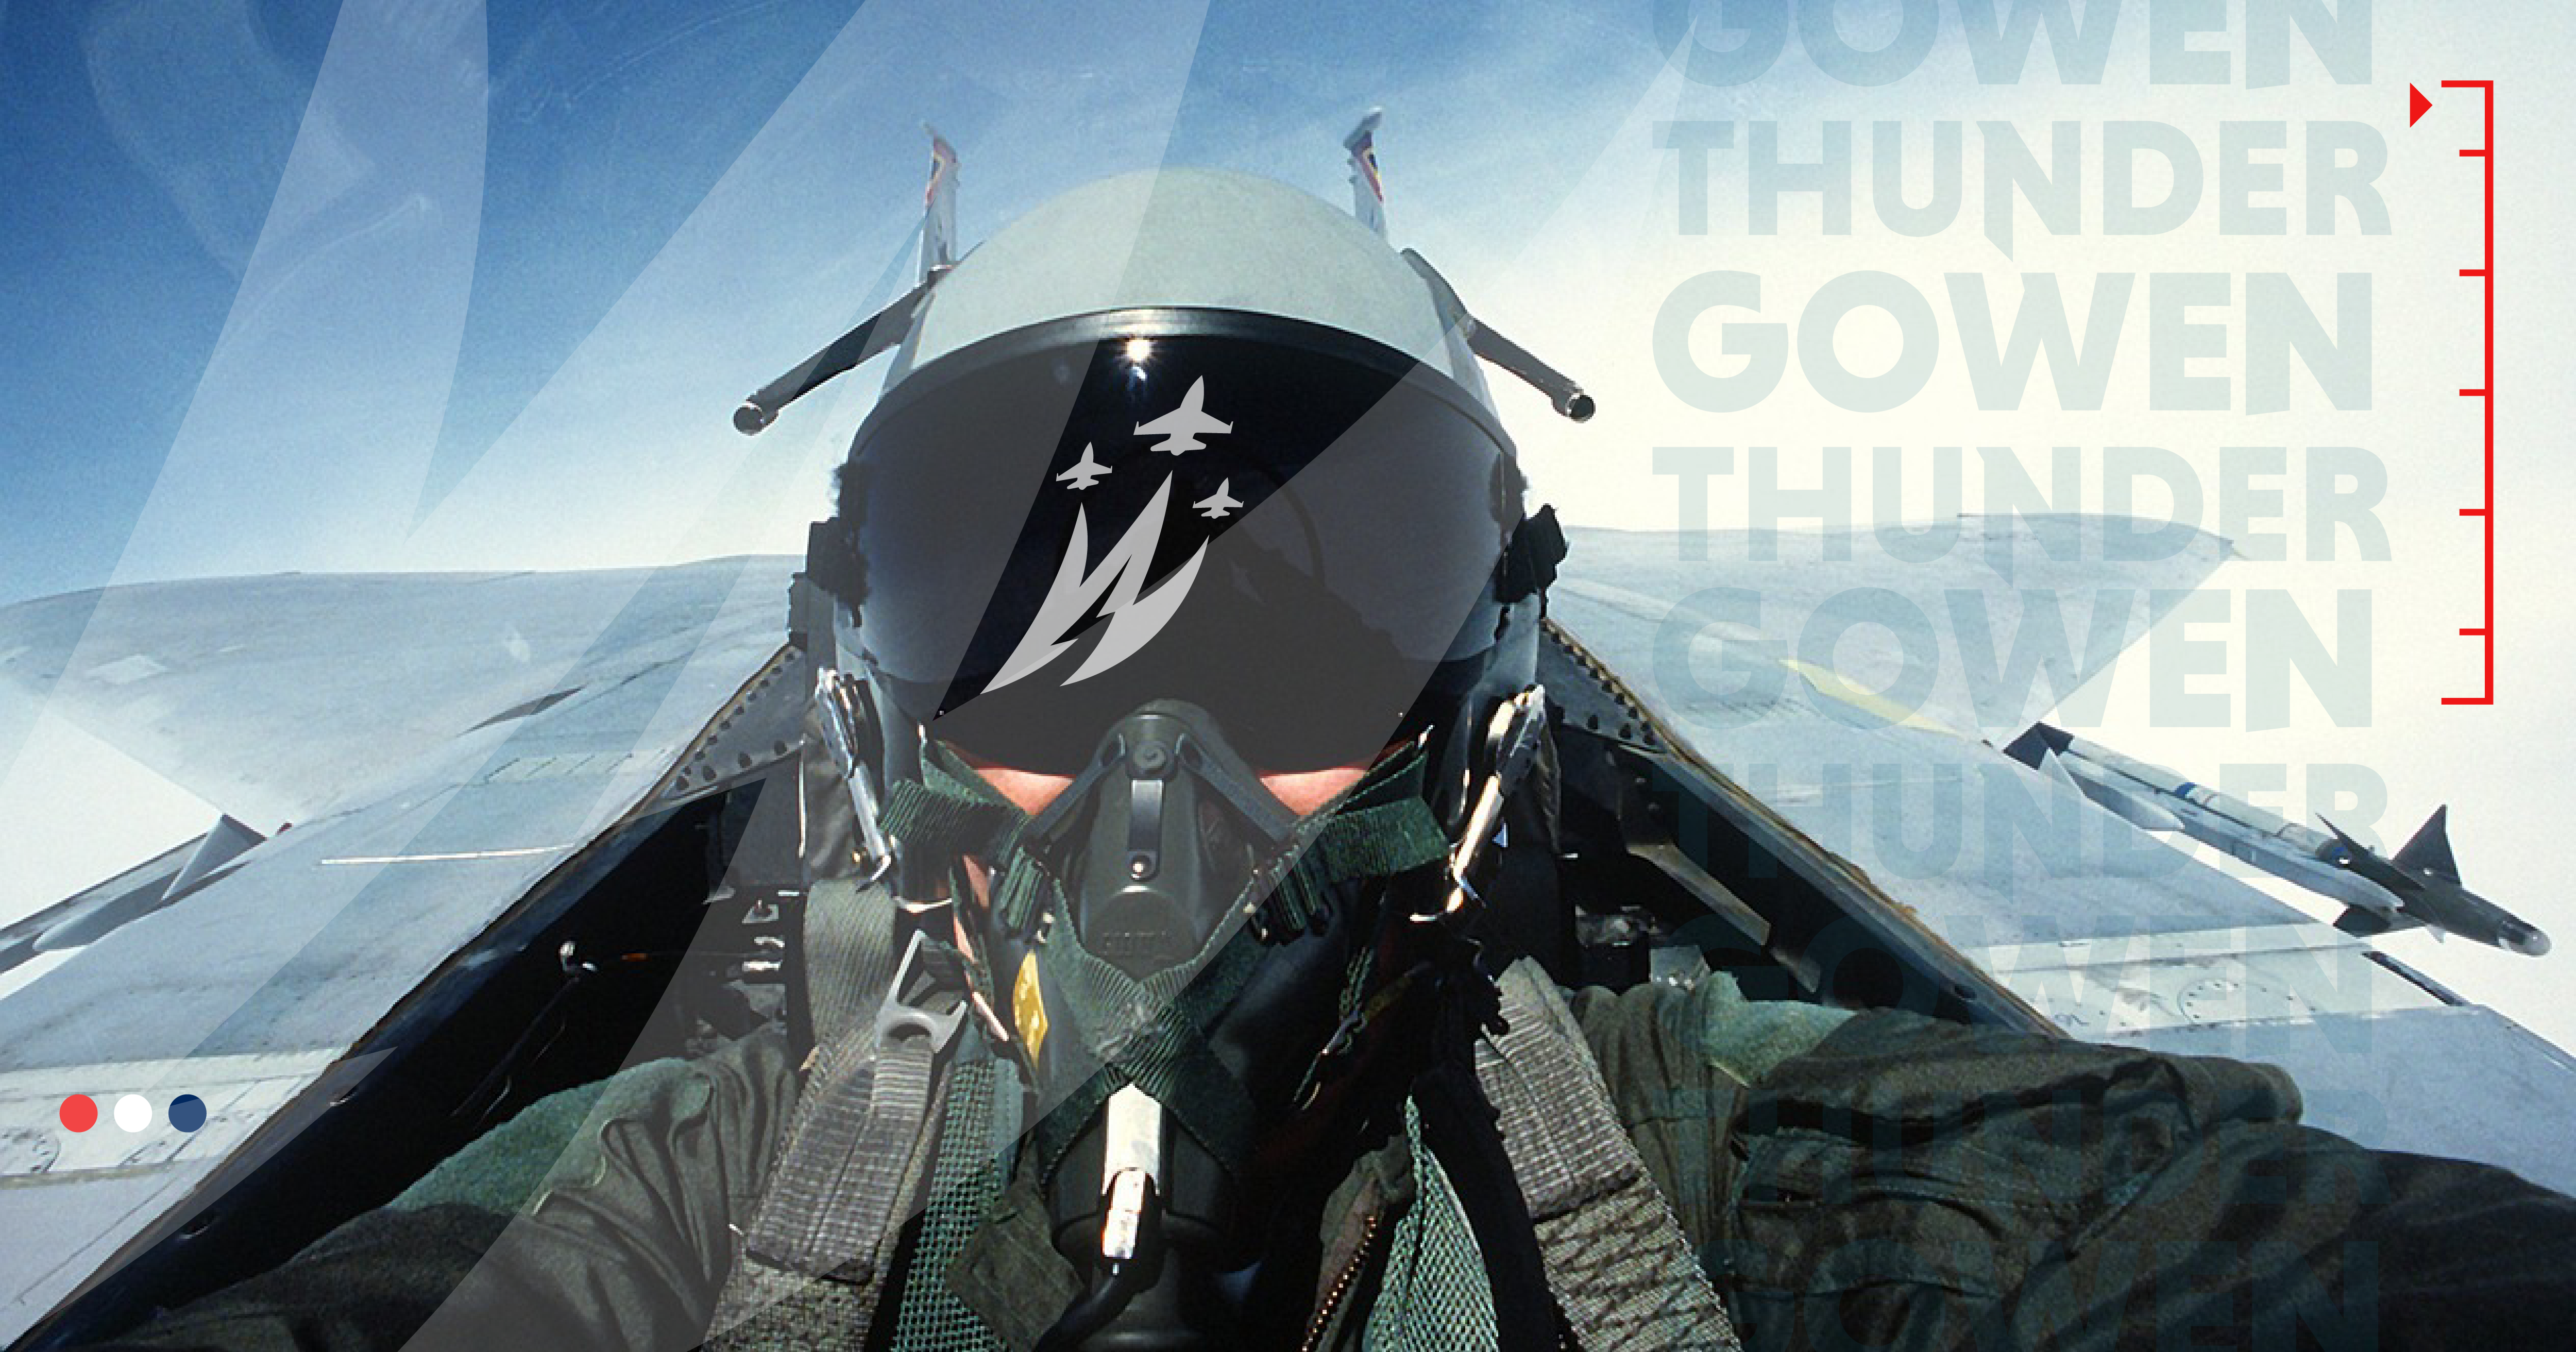 Gowen Thunder 2023's Thunderbird pilot flying the F-16 Fighting Falcon.